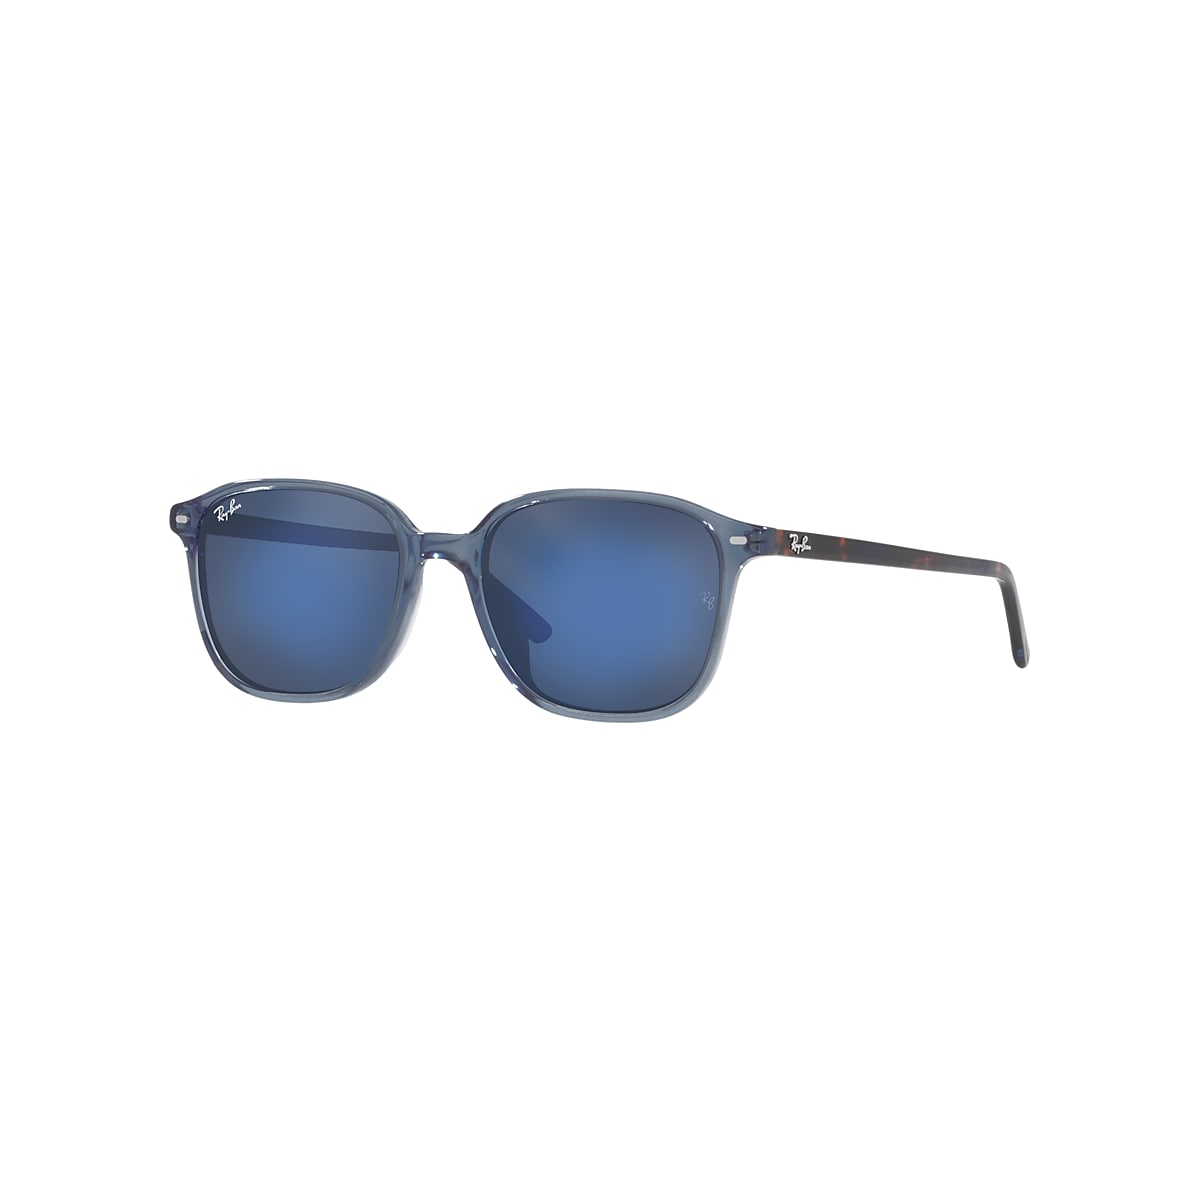 LEONARD Sunglasses in Transparent Dark Blue and Blue - RB2193F 